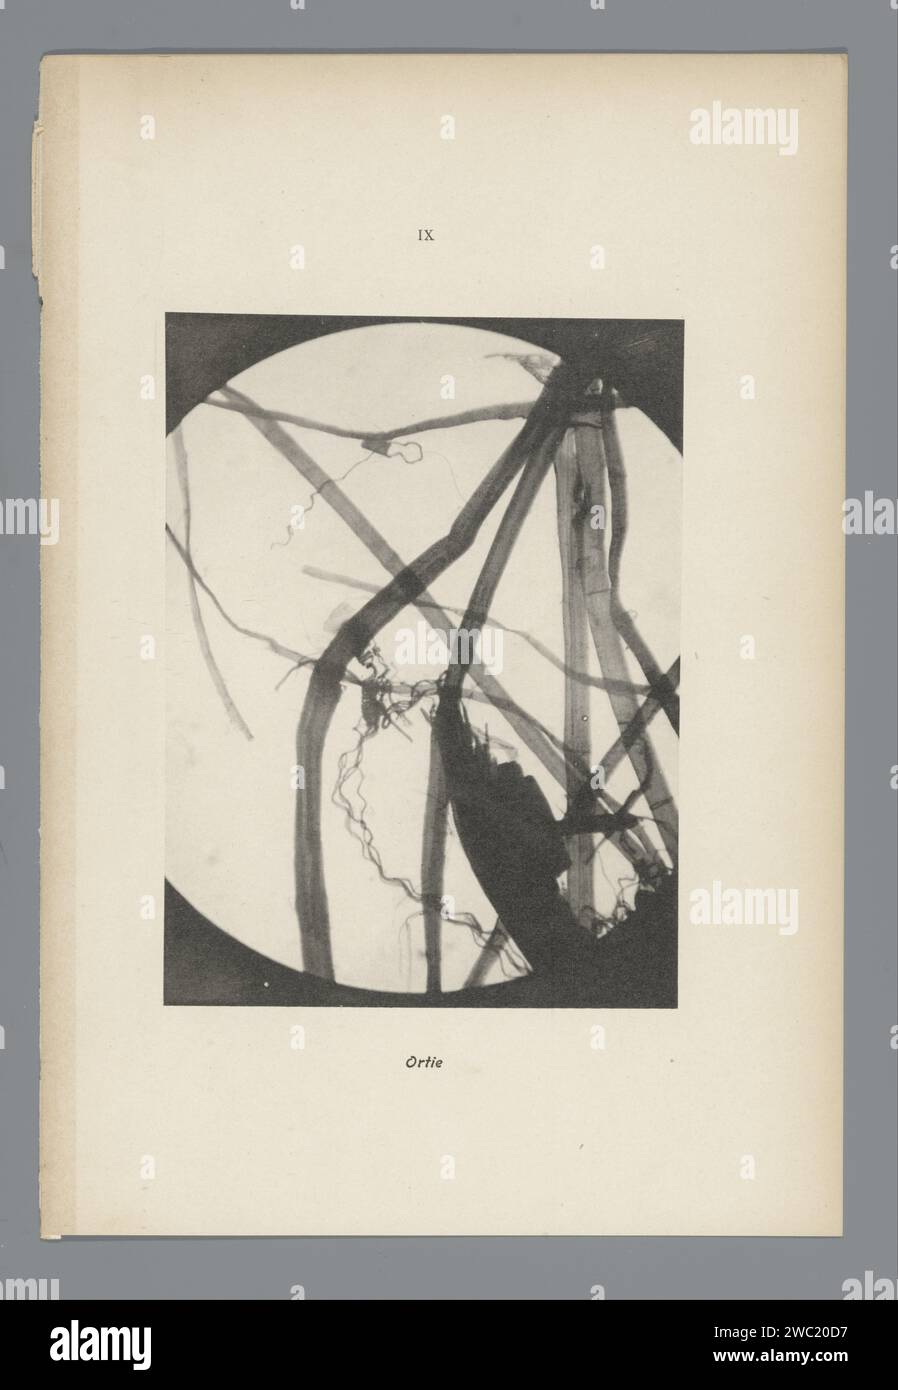 IX Nettie, Anonym, 1900 Fototeller aus Précis Historique. Frankreich Papier. Farbkollotyp Stockfoto